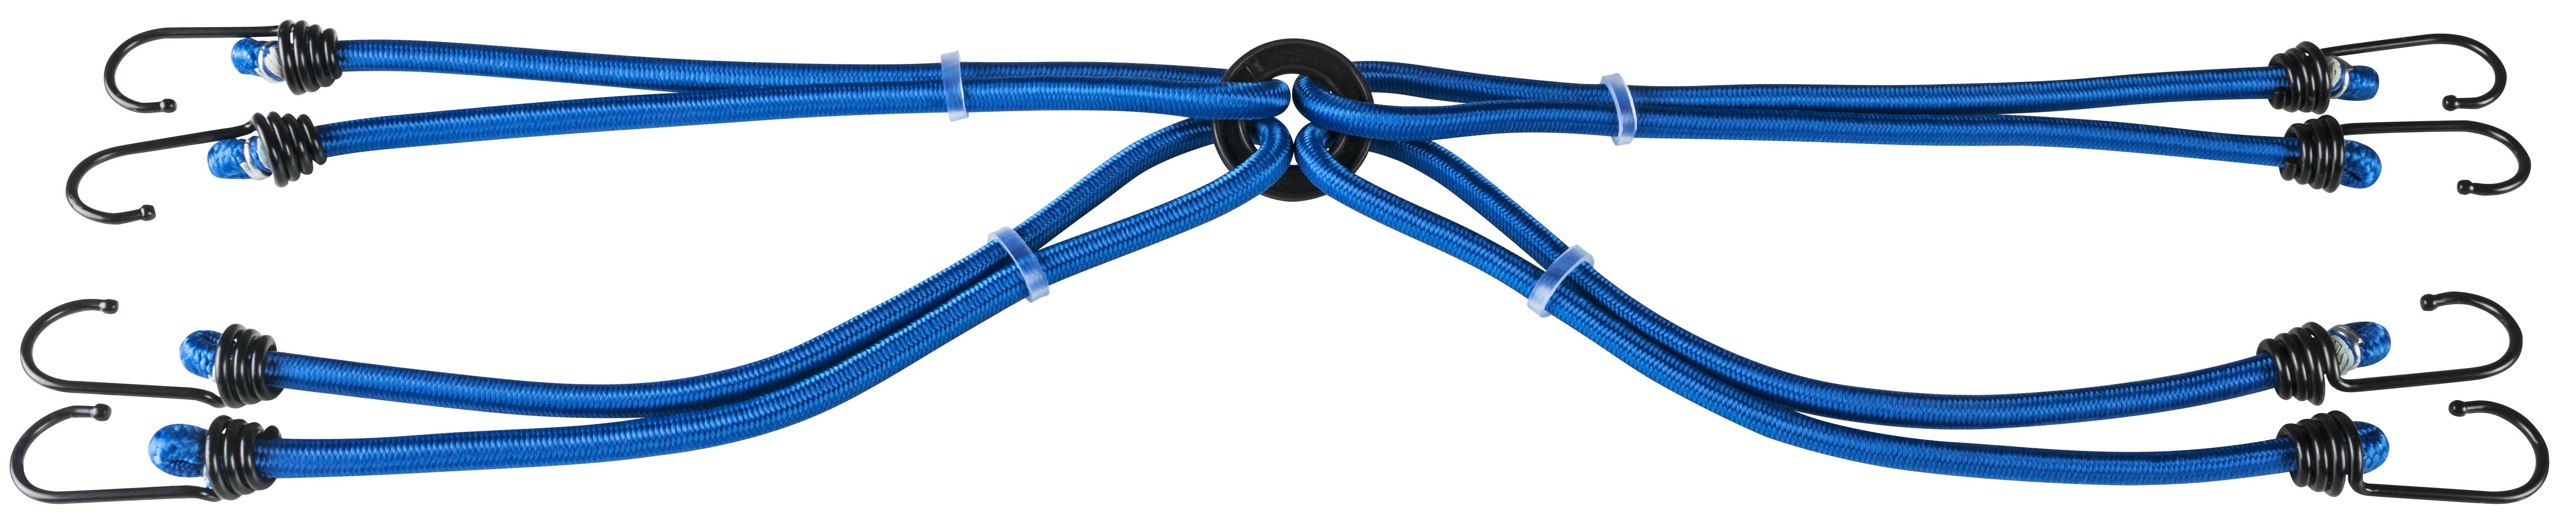 Bagagespin 8-armig, per stuk 60 cm blauw